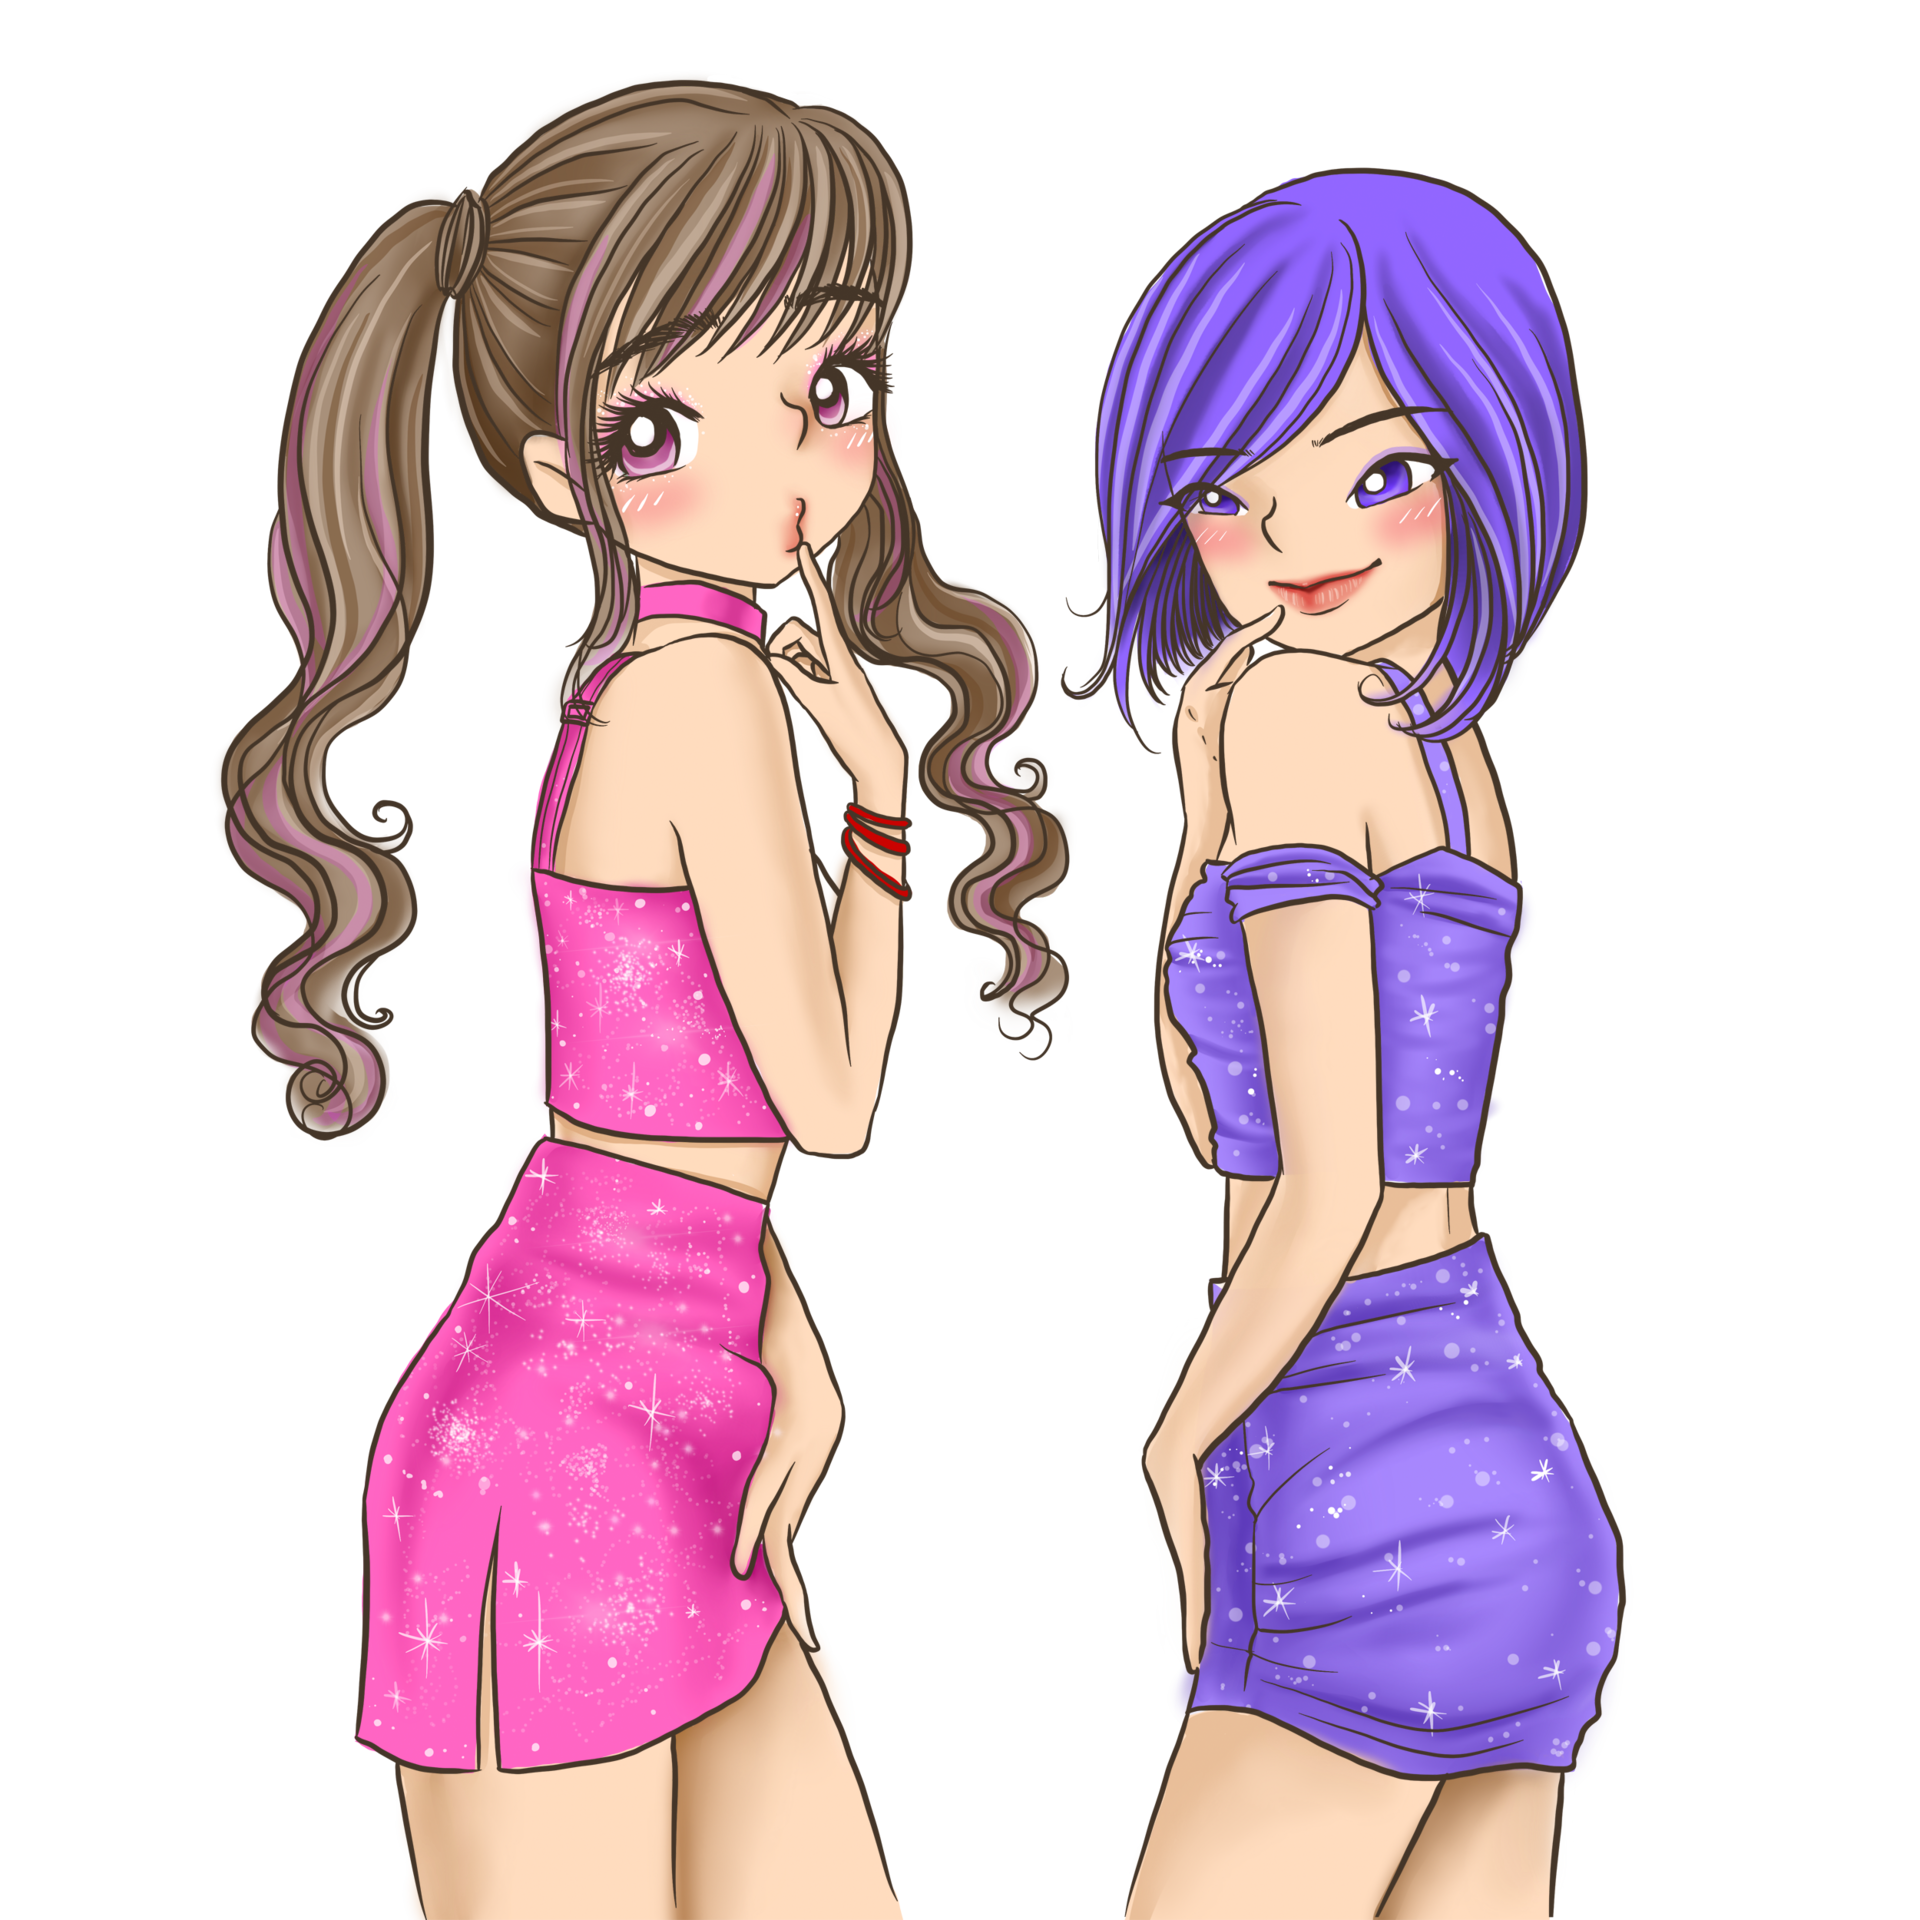 iAnimangacom в X Best friend anime animegirl animegirls animeartist  animecute animelover animelove animefans friendship friend  friendzone manga httpstco6K5TBereHc  X